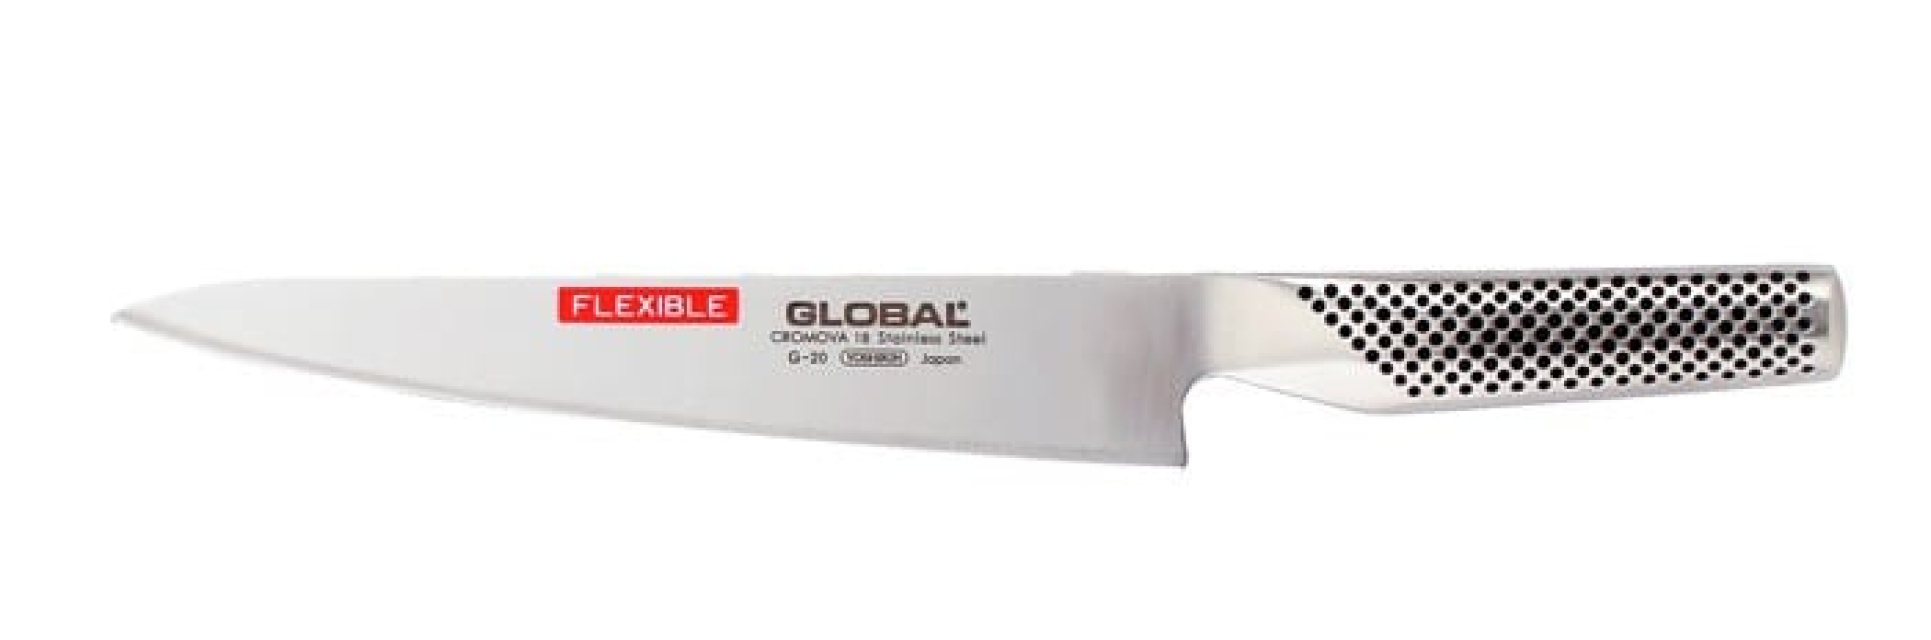 Global G-20 Bred filetkniv, 21cm, fleksibel